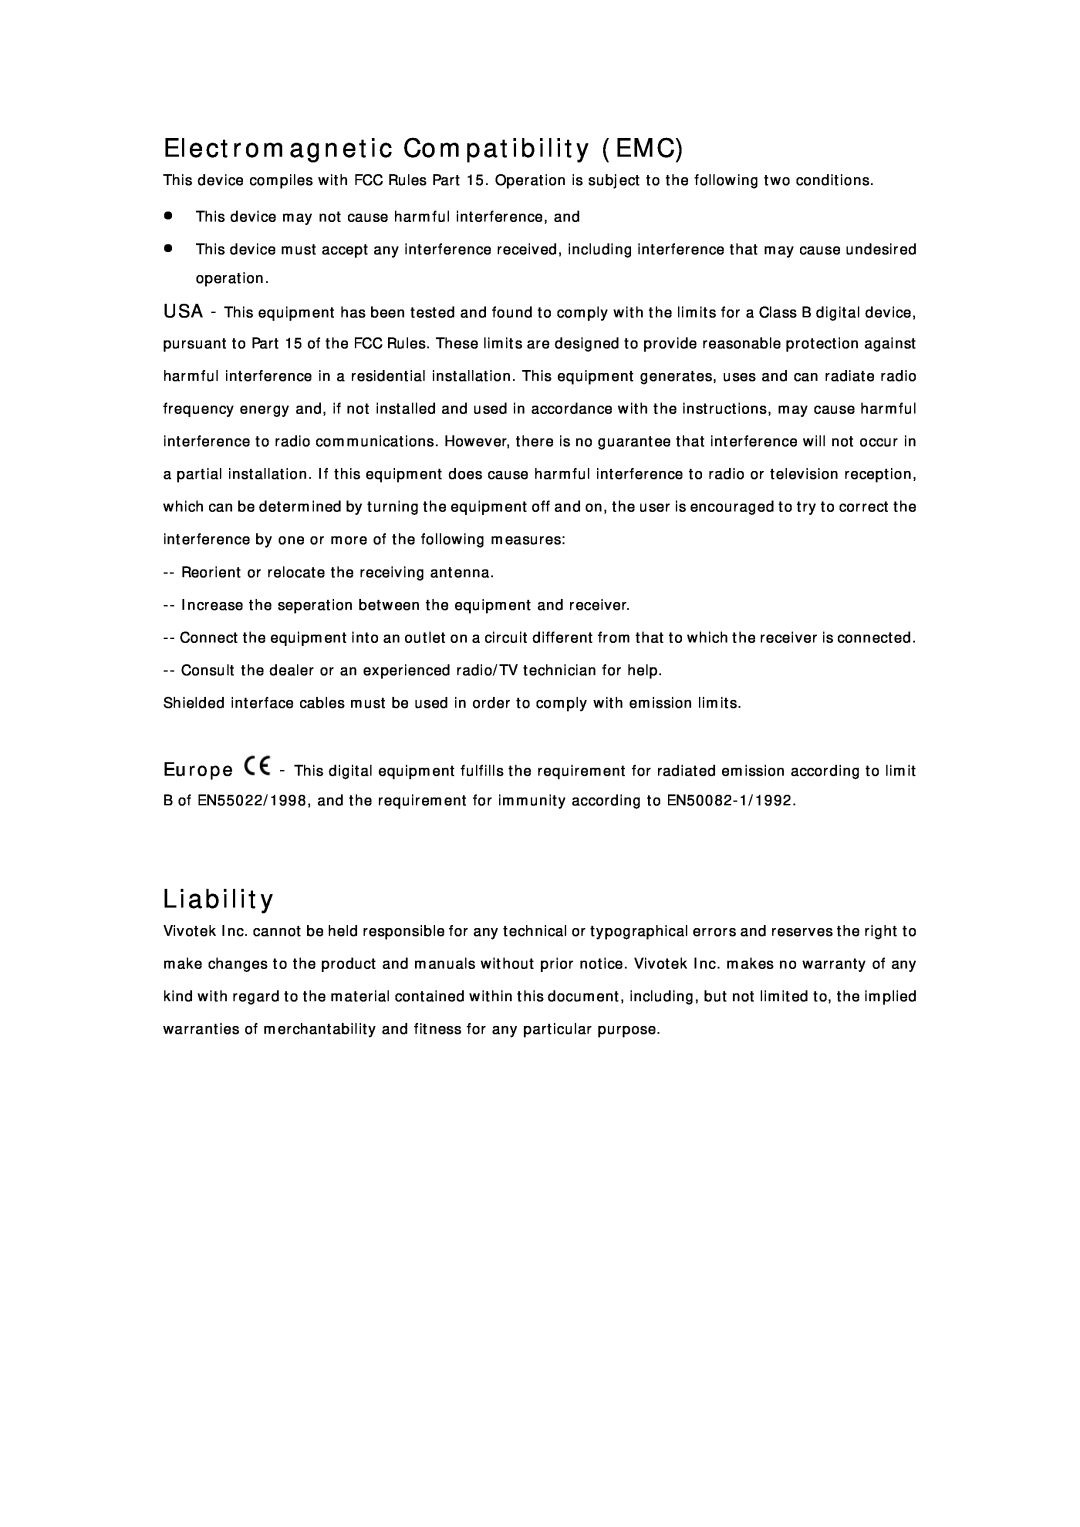 Vivotek RX7101 manual Electromagnetic Compatibility EMC, Liability 